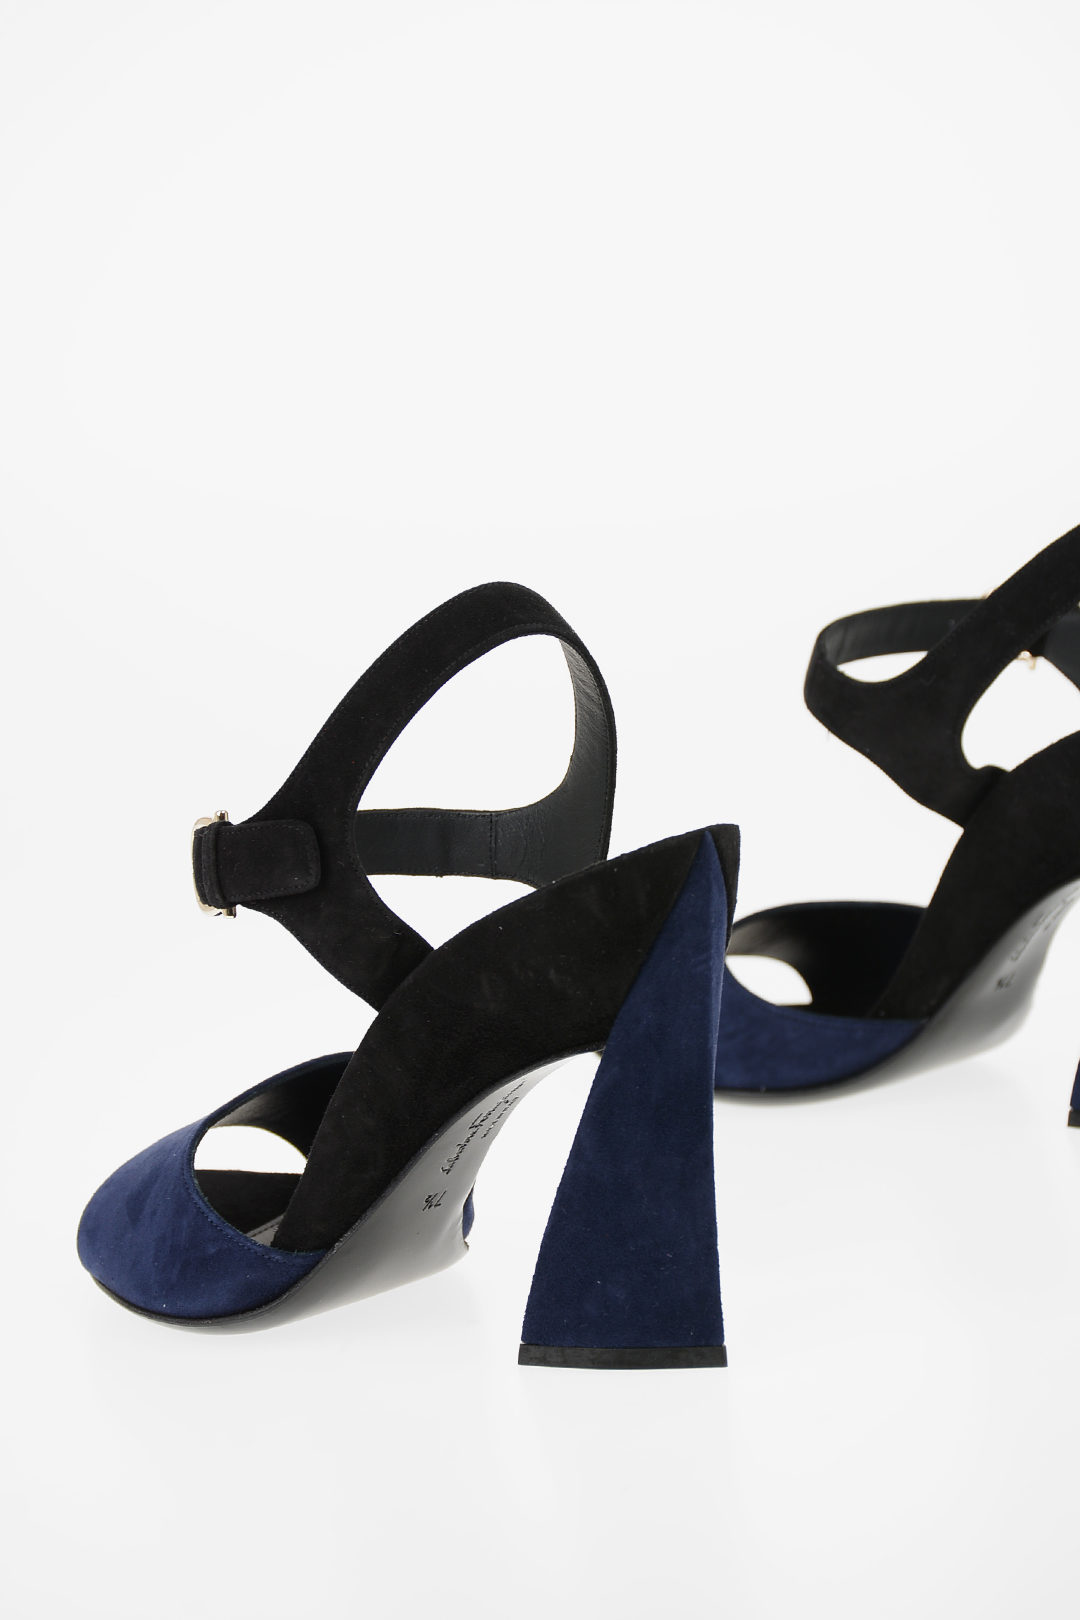 Salvatore Ferragamo 10.5cm Suede leather AEDE Ankle-strap sandals women ...